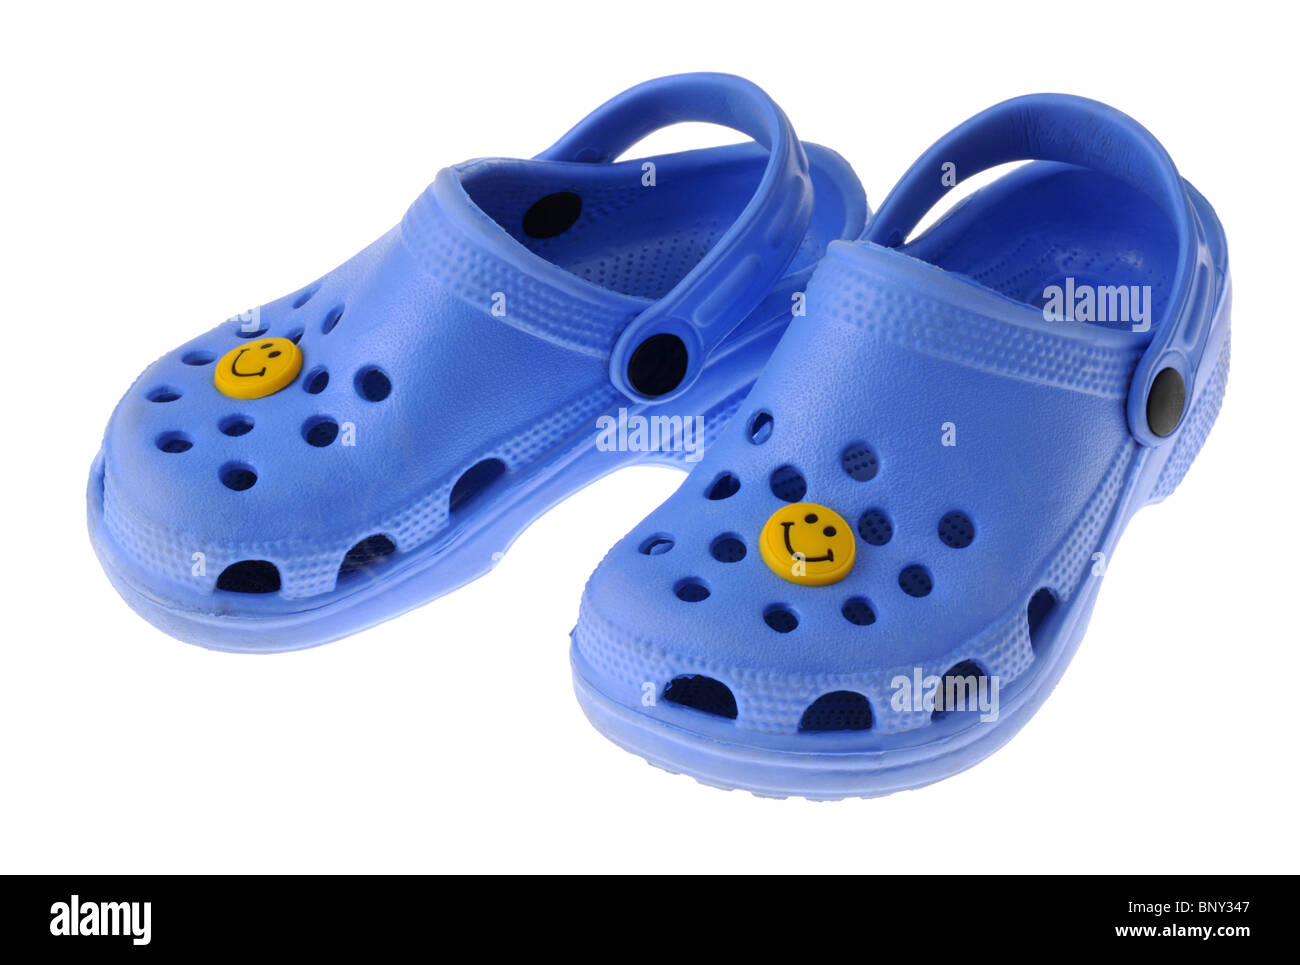 Crocs style shoes, sandals Stock Photo 